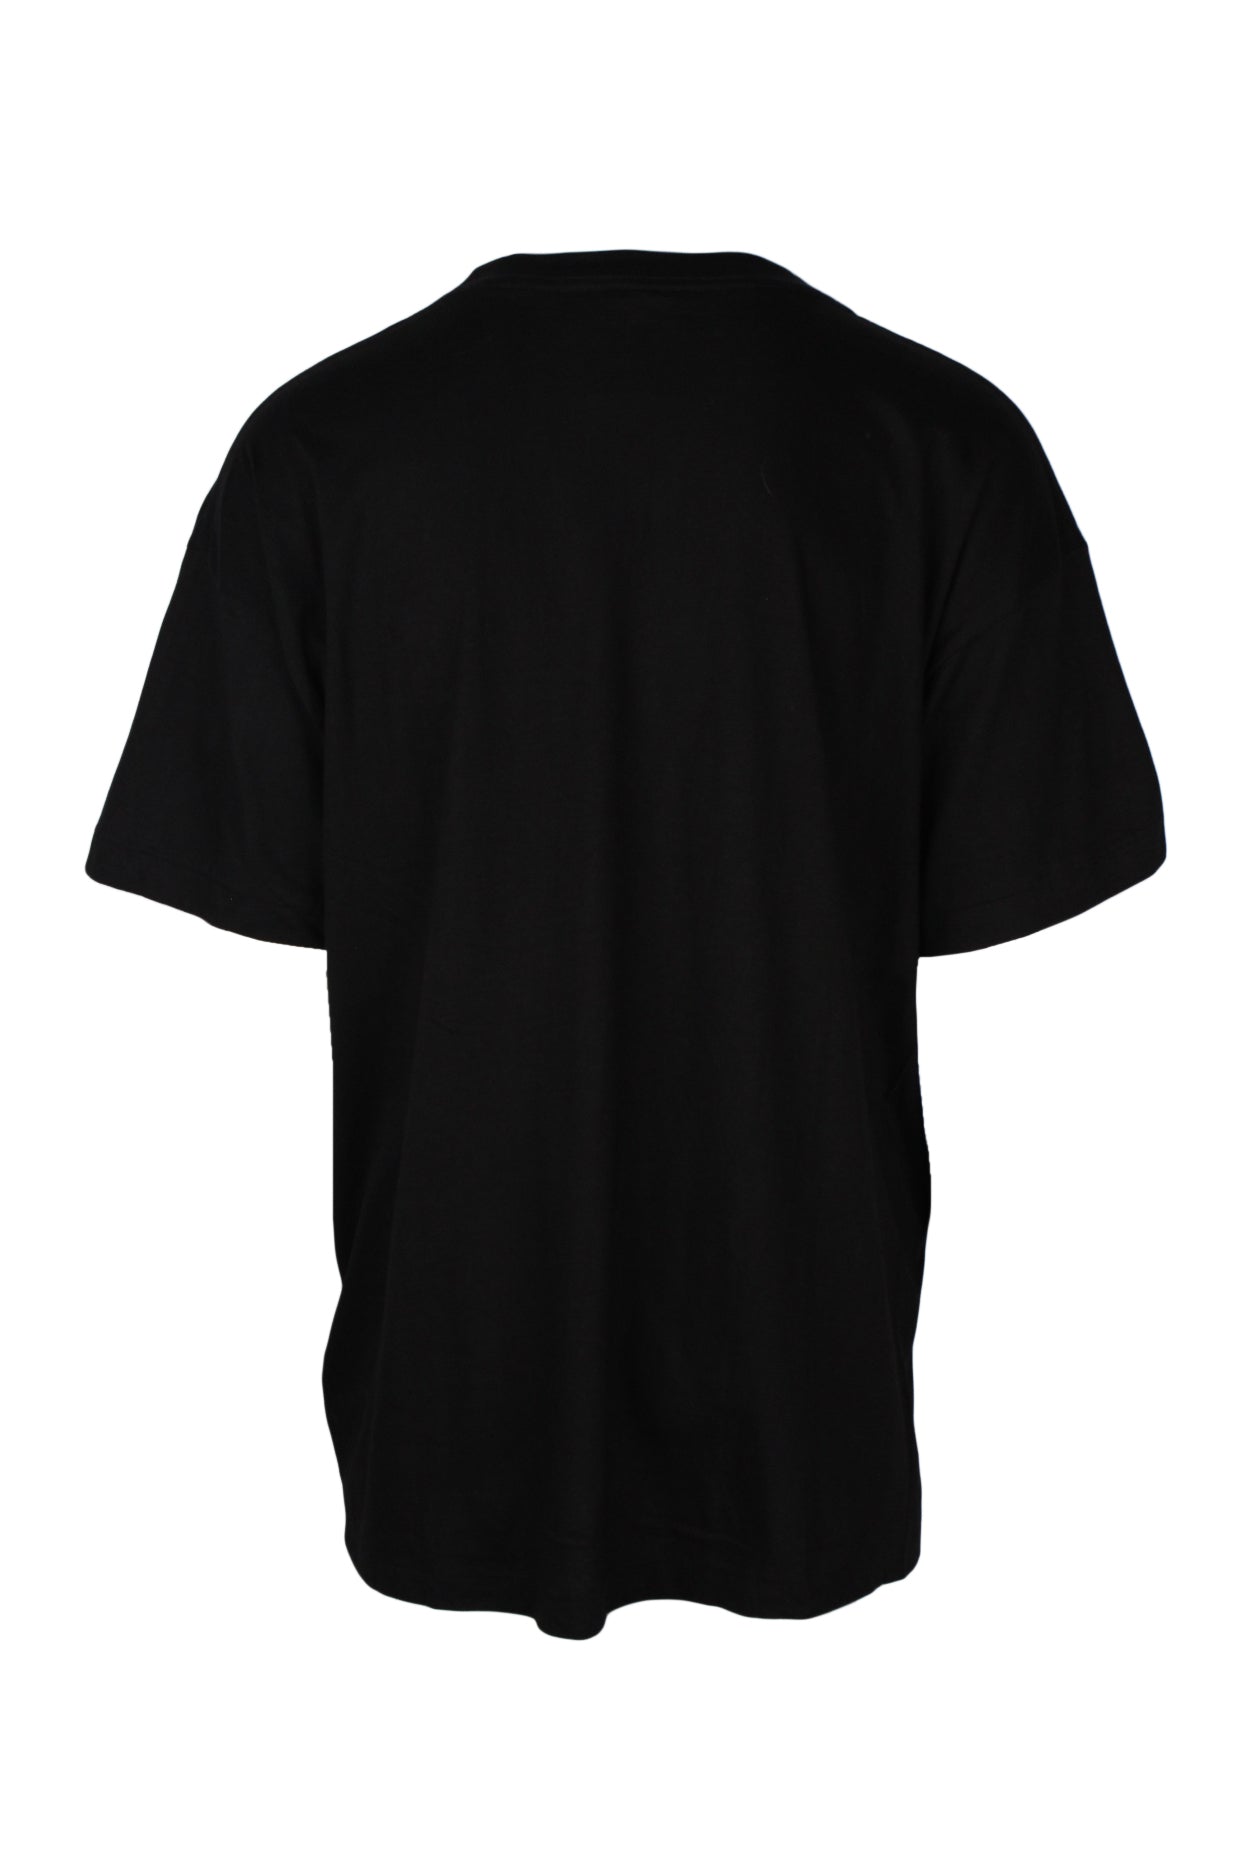 back angle of short sleeve black t-shirt. 